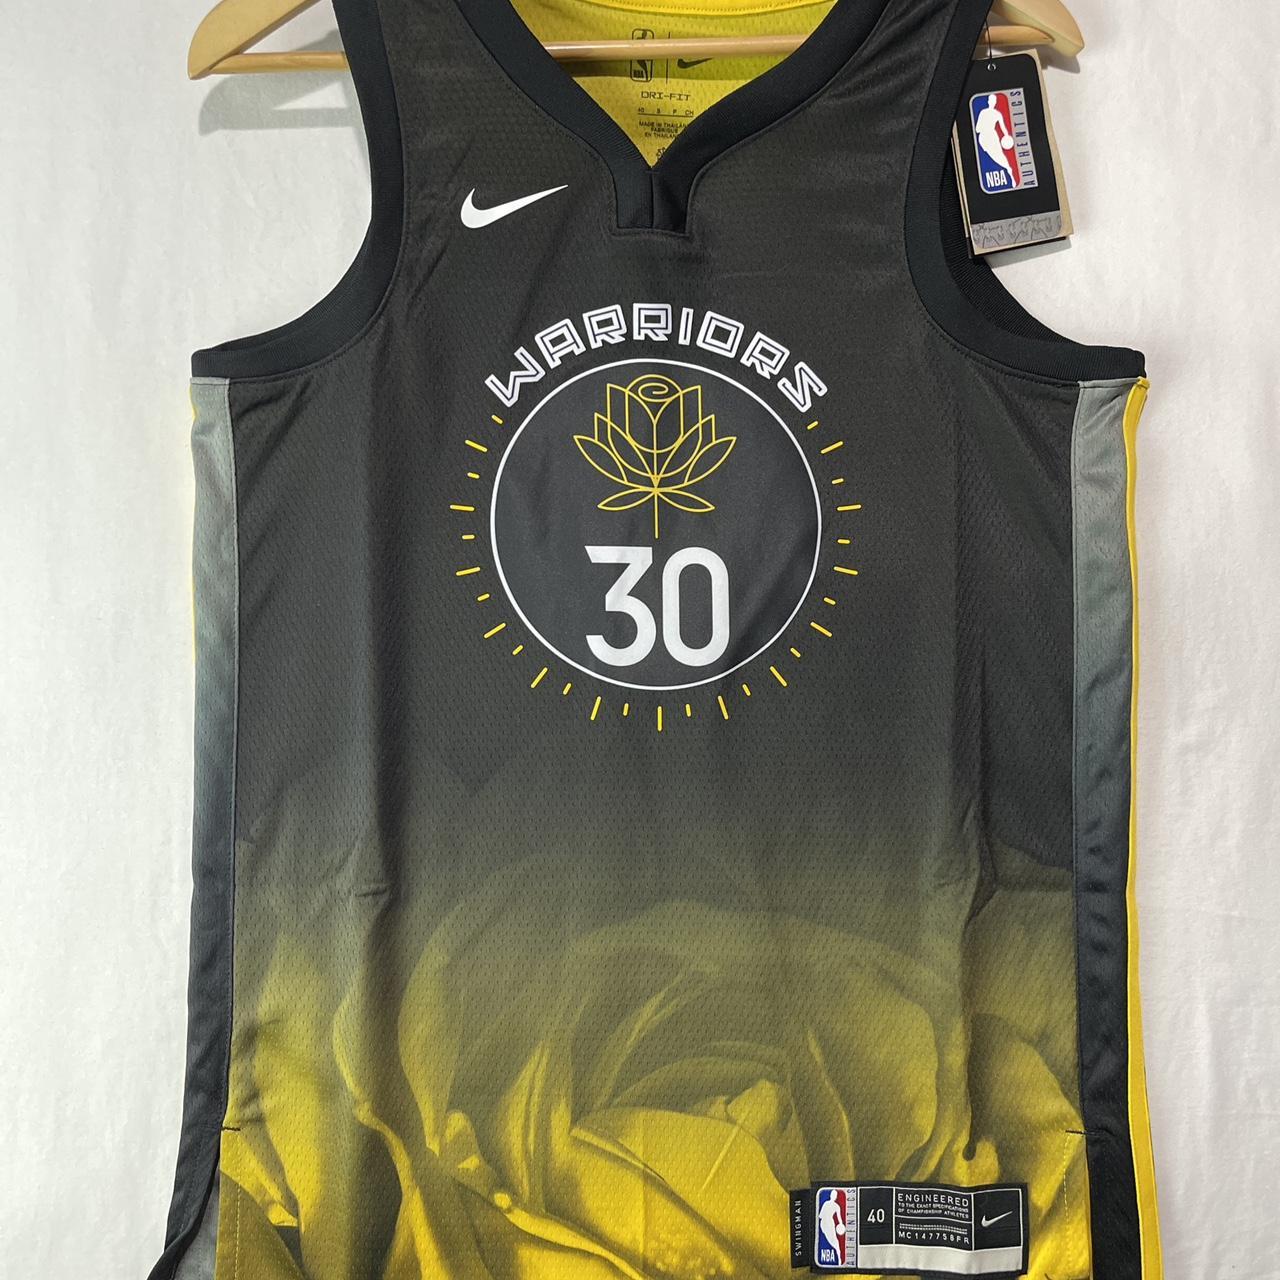 Golden State Warriors City Edition Nike Dri-FIT NBA Swingman Jersey.